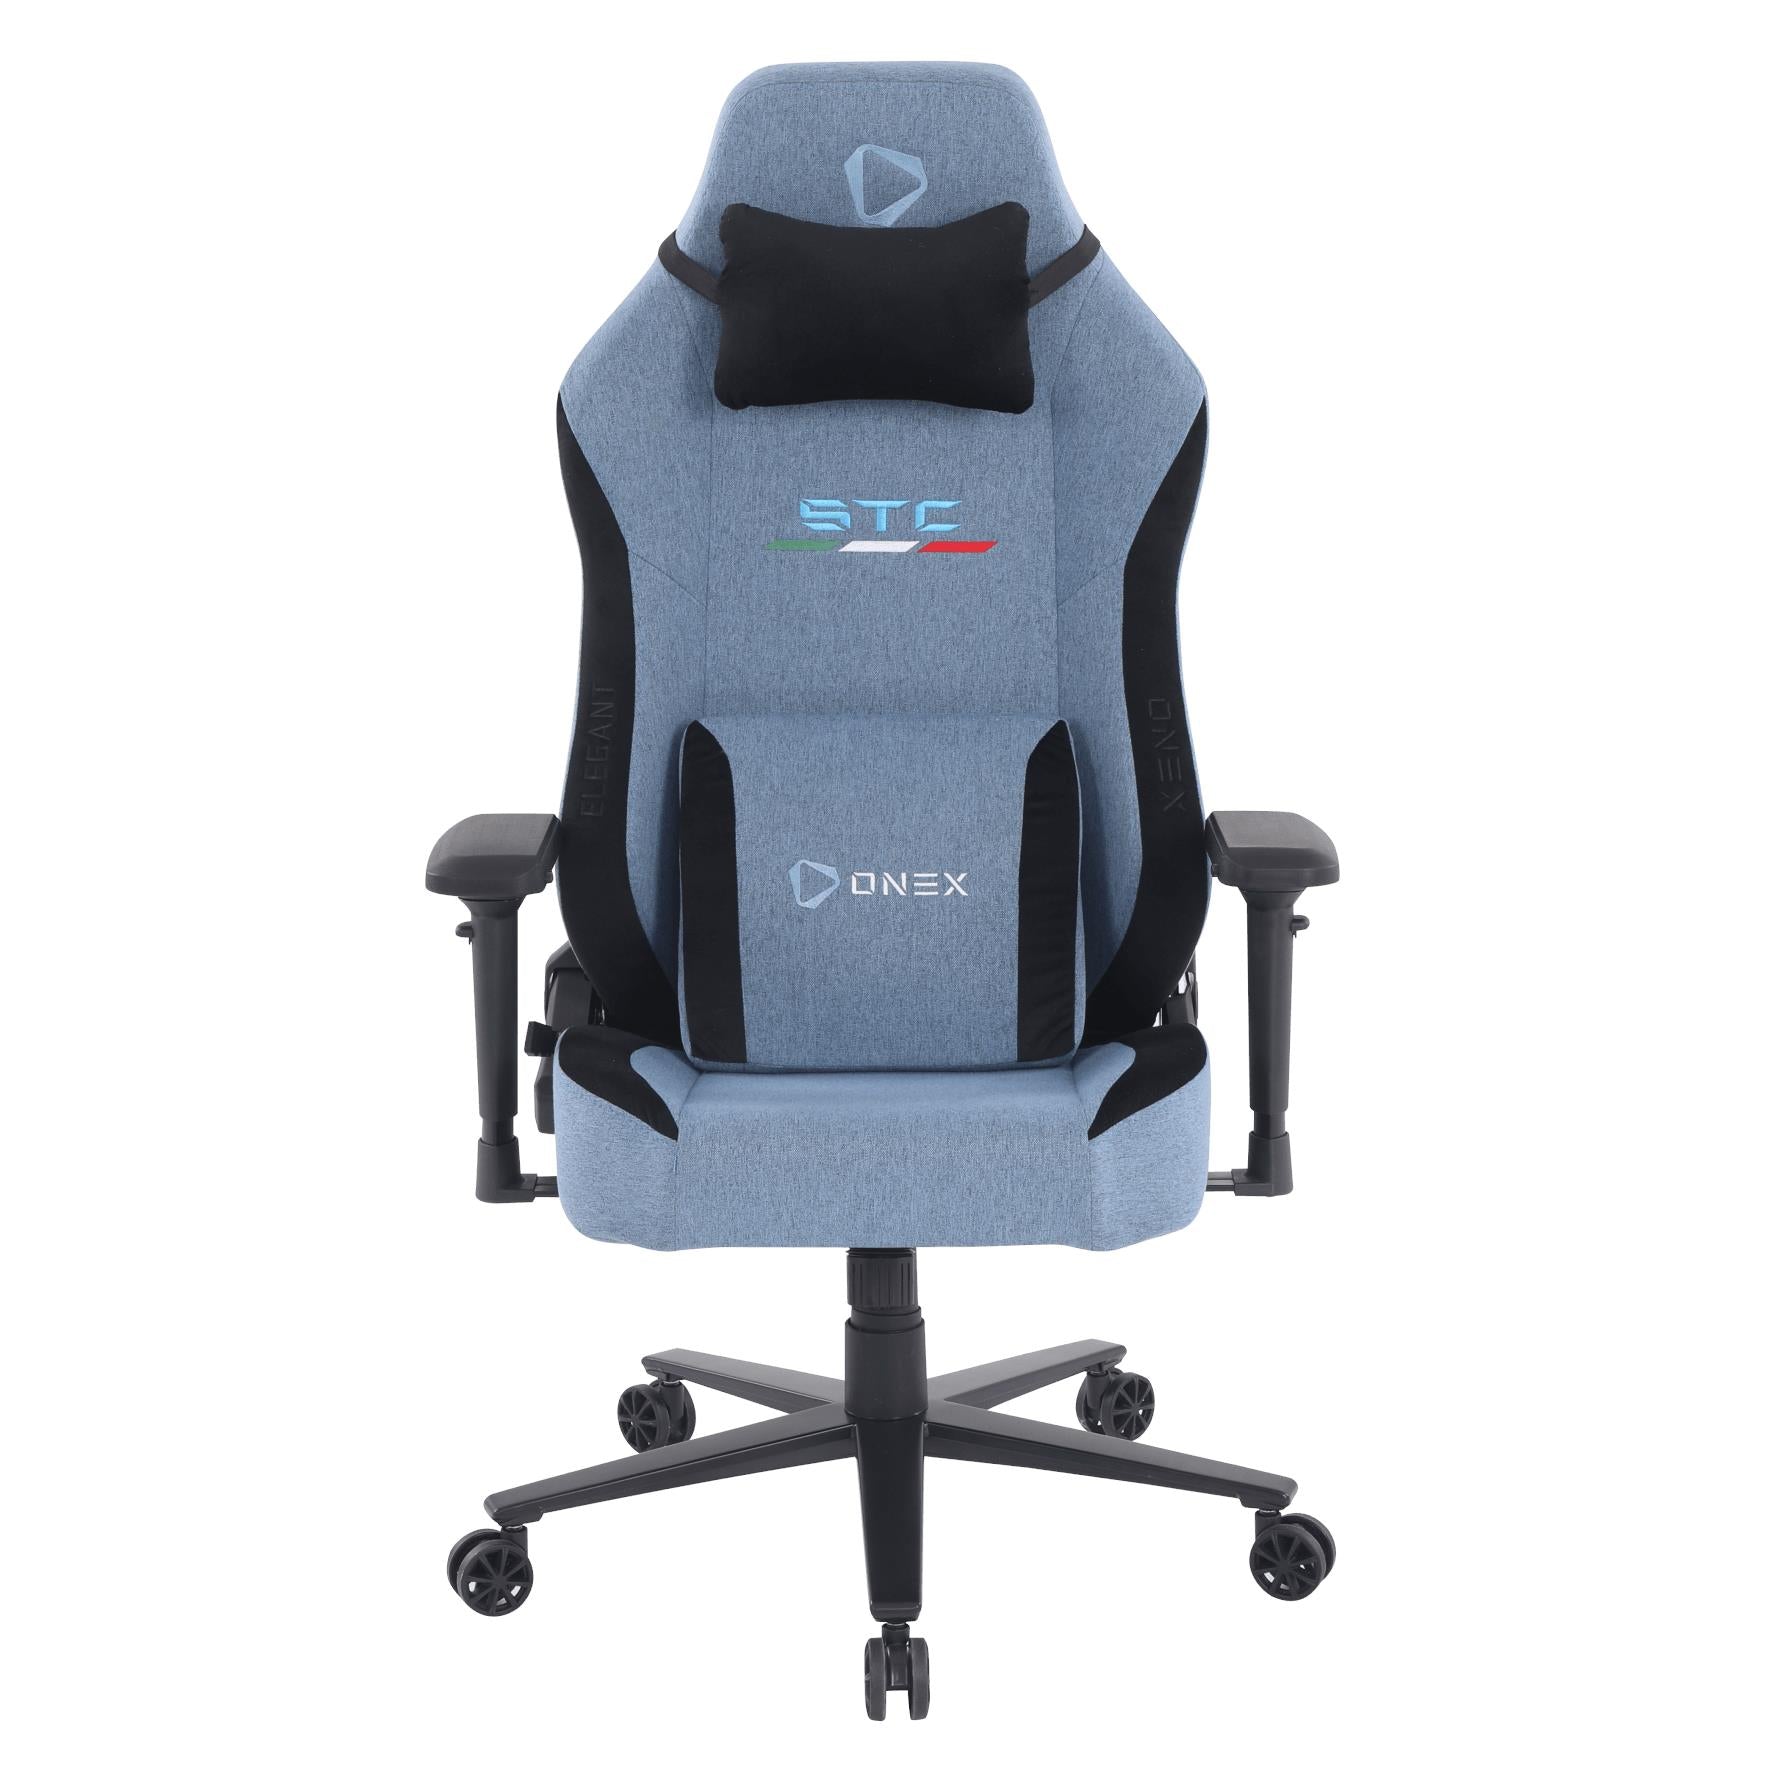 onex stc elegant xl series gaming chair (cowboy)